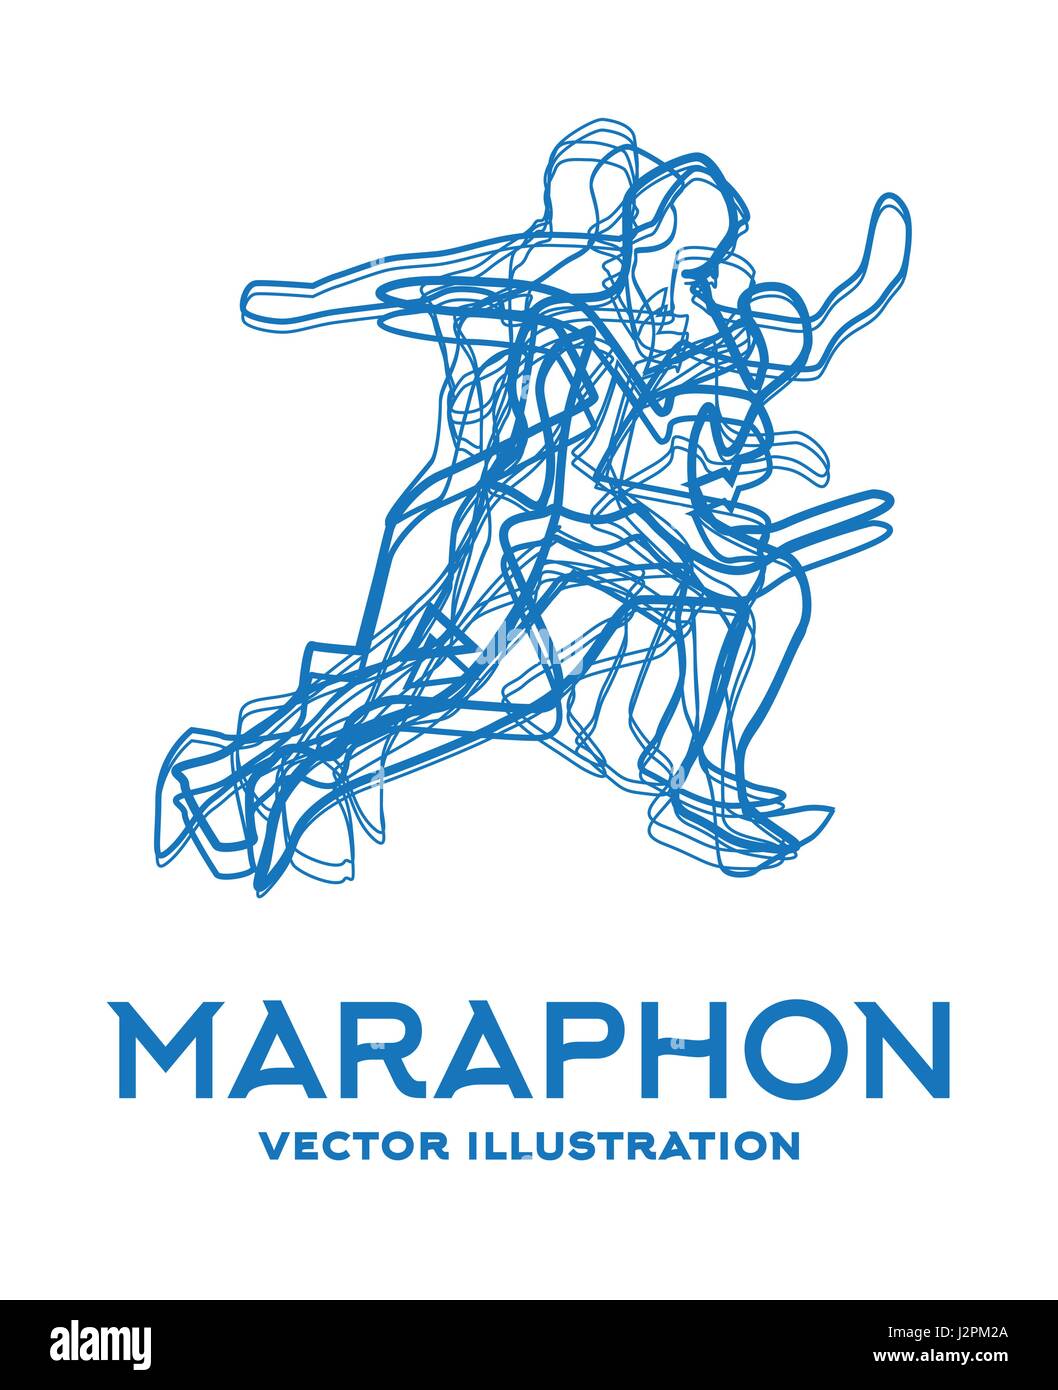 Laufende Menschen. Marathon-Konzept. Vektor-Illustration. Stock Vektor